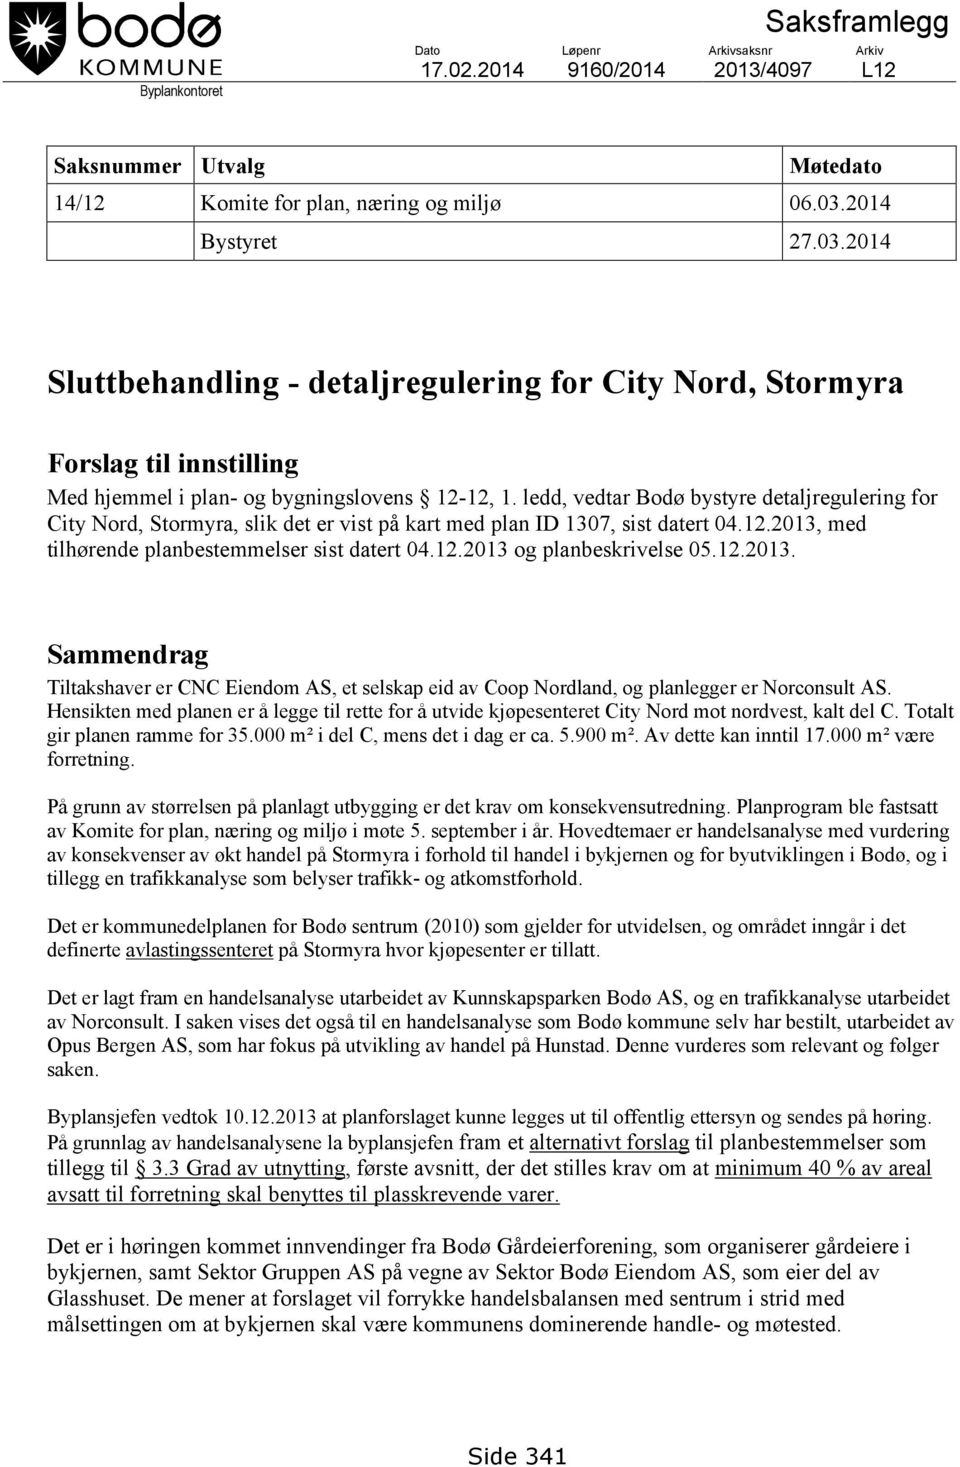 ledd, vedtar Bodø bystyre detaljregulering for City Nord, Stormyra, slik det er vist på kart med plan ID 1307, sist datert 04.12.2013, med tilhørende planbestemmelser sist datert 04.12.2013 og planbeskrivelse 05.